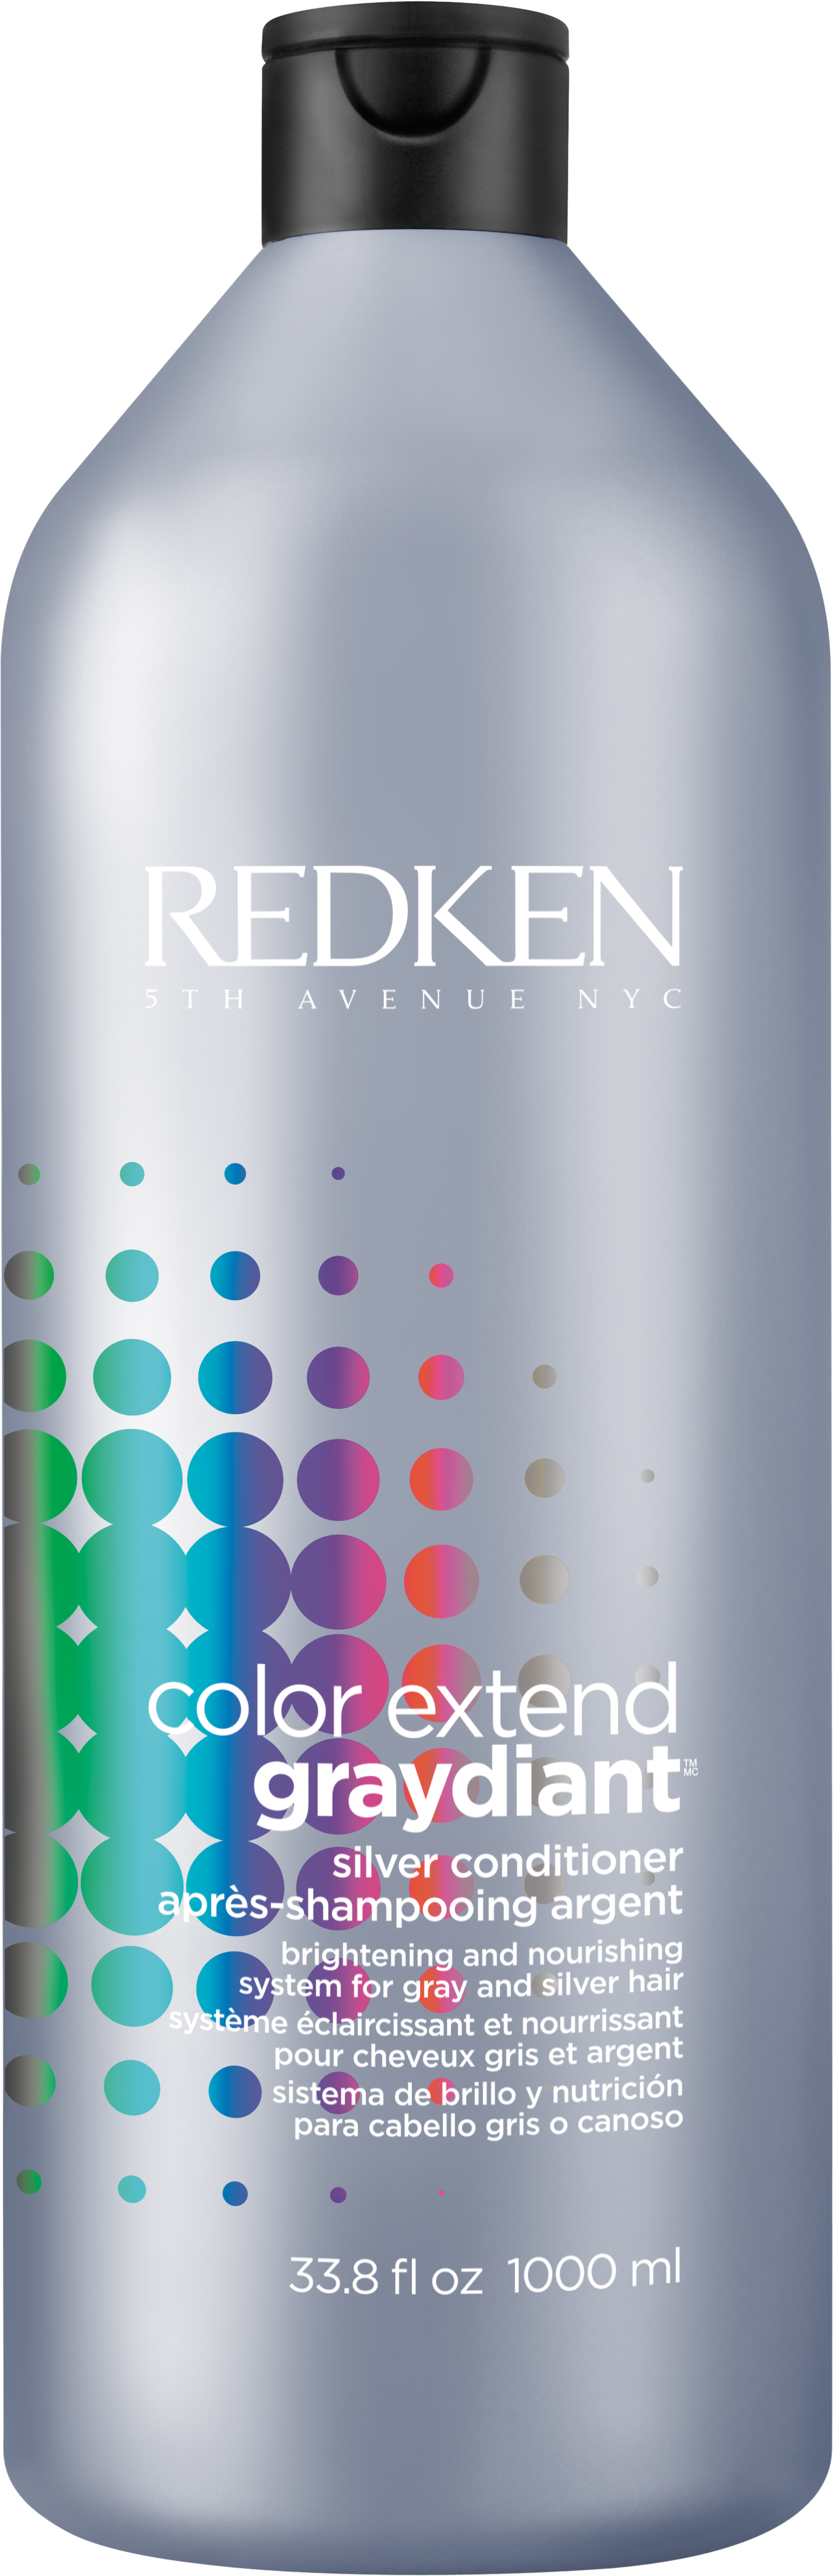 Redken - Color Extend Graydiant - Conditioner - 1L - ProCare Outlet by Redken